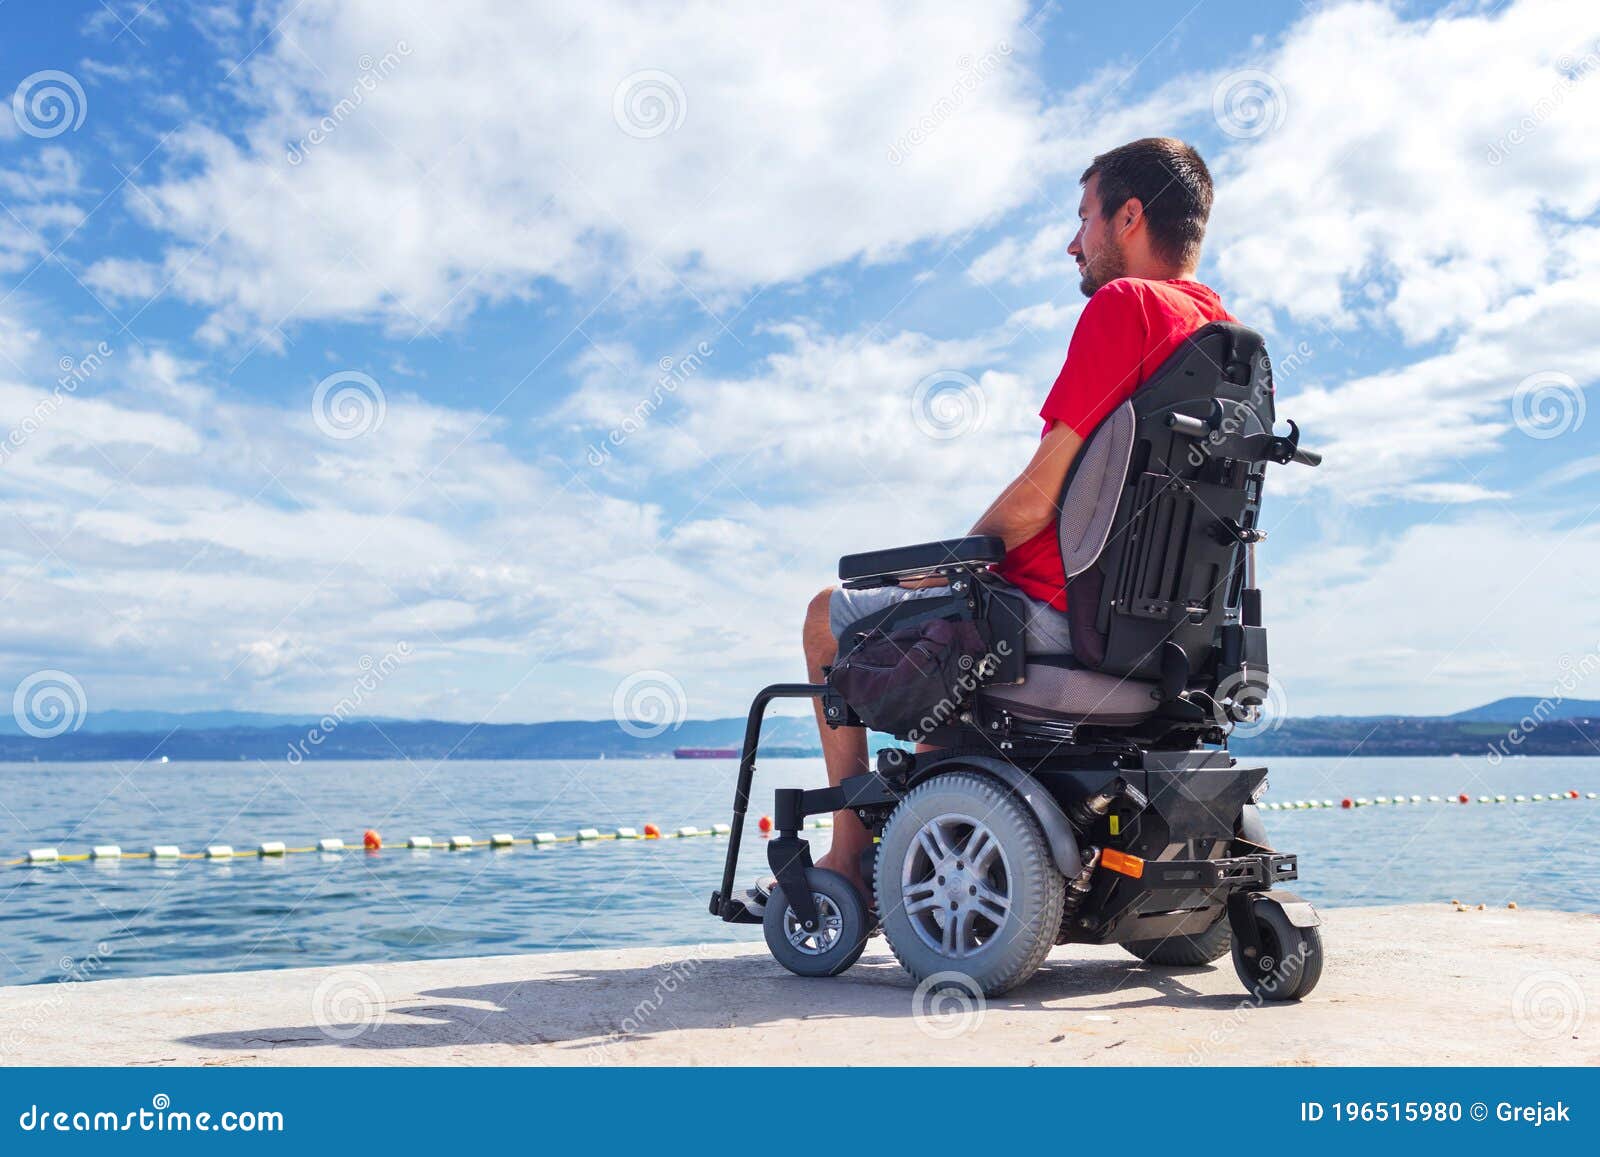 man on electric wheelchair